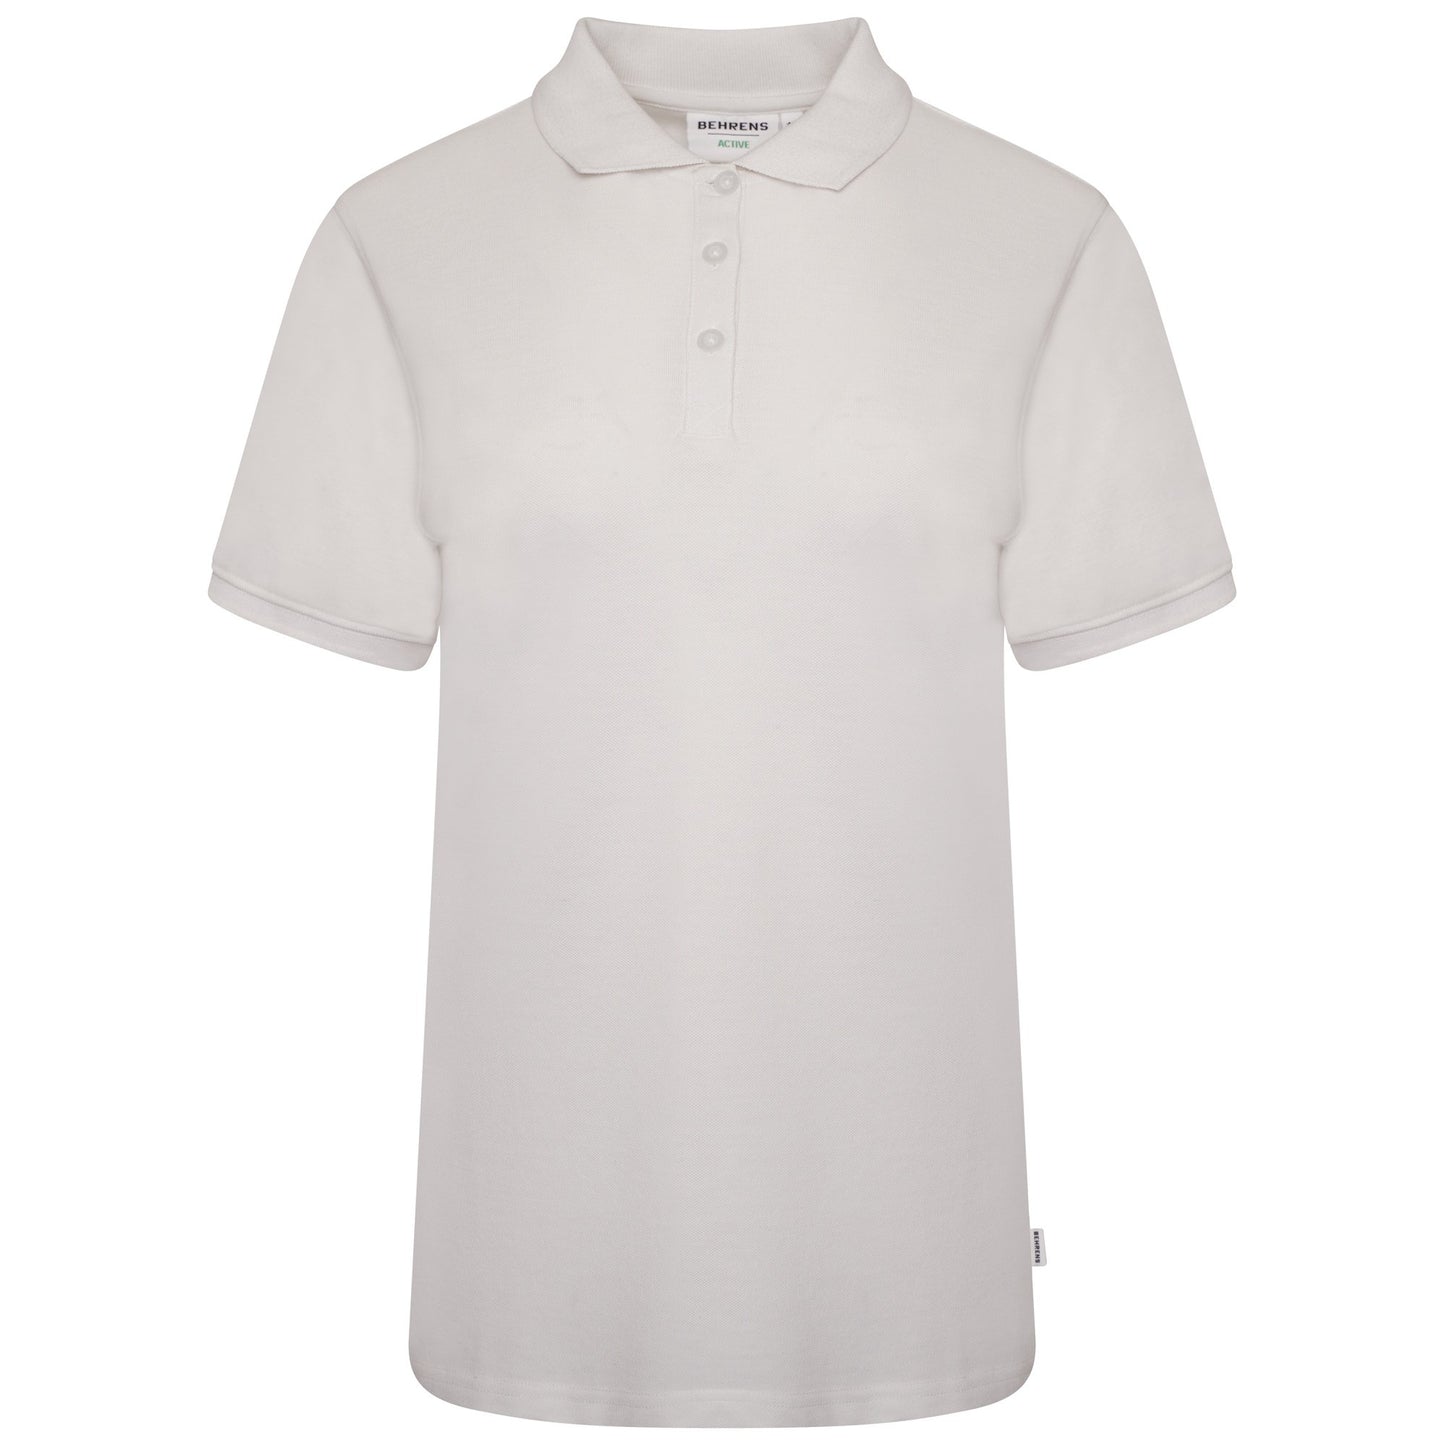 Behrens Ladies Pique Polo Shirt - BEH-4469L - White - UK 8